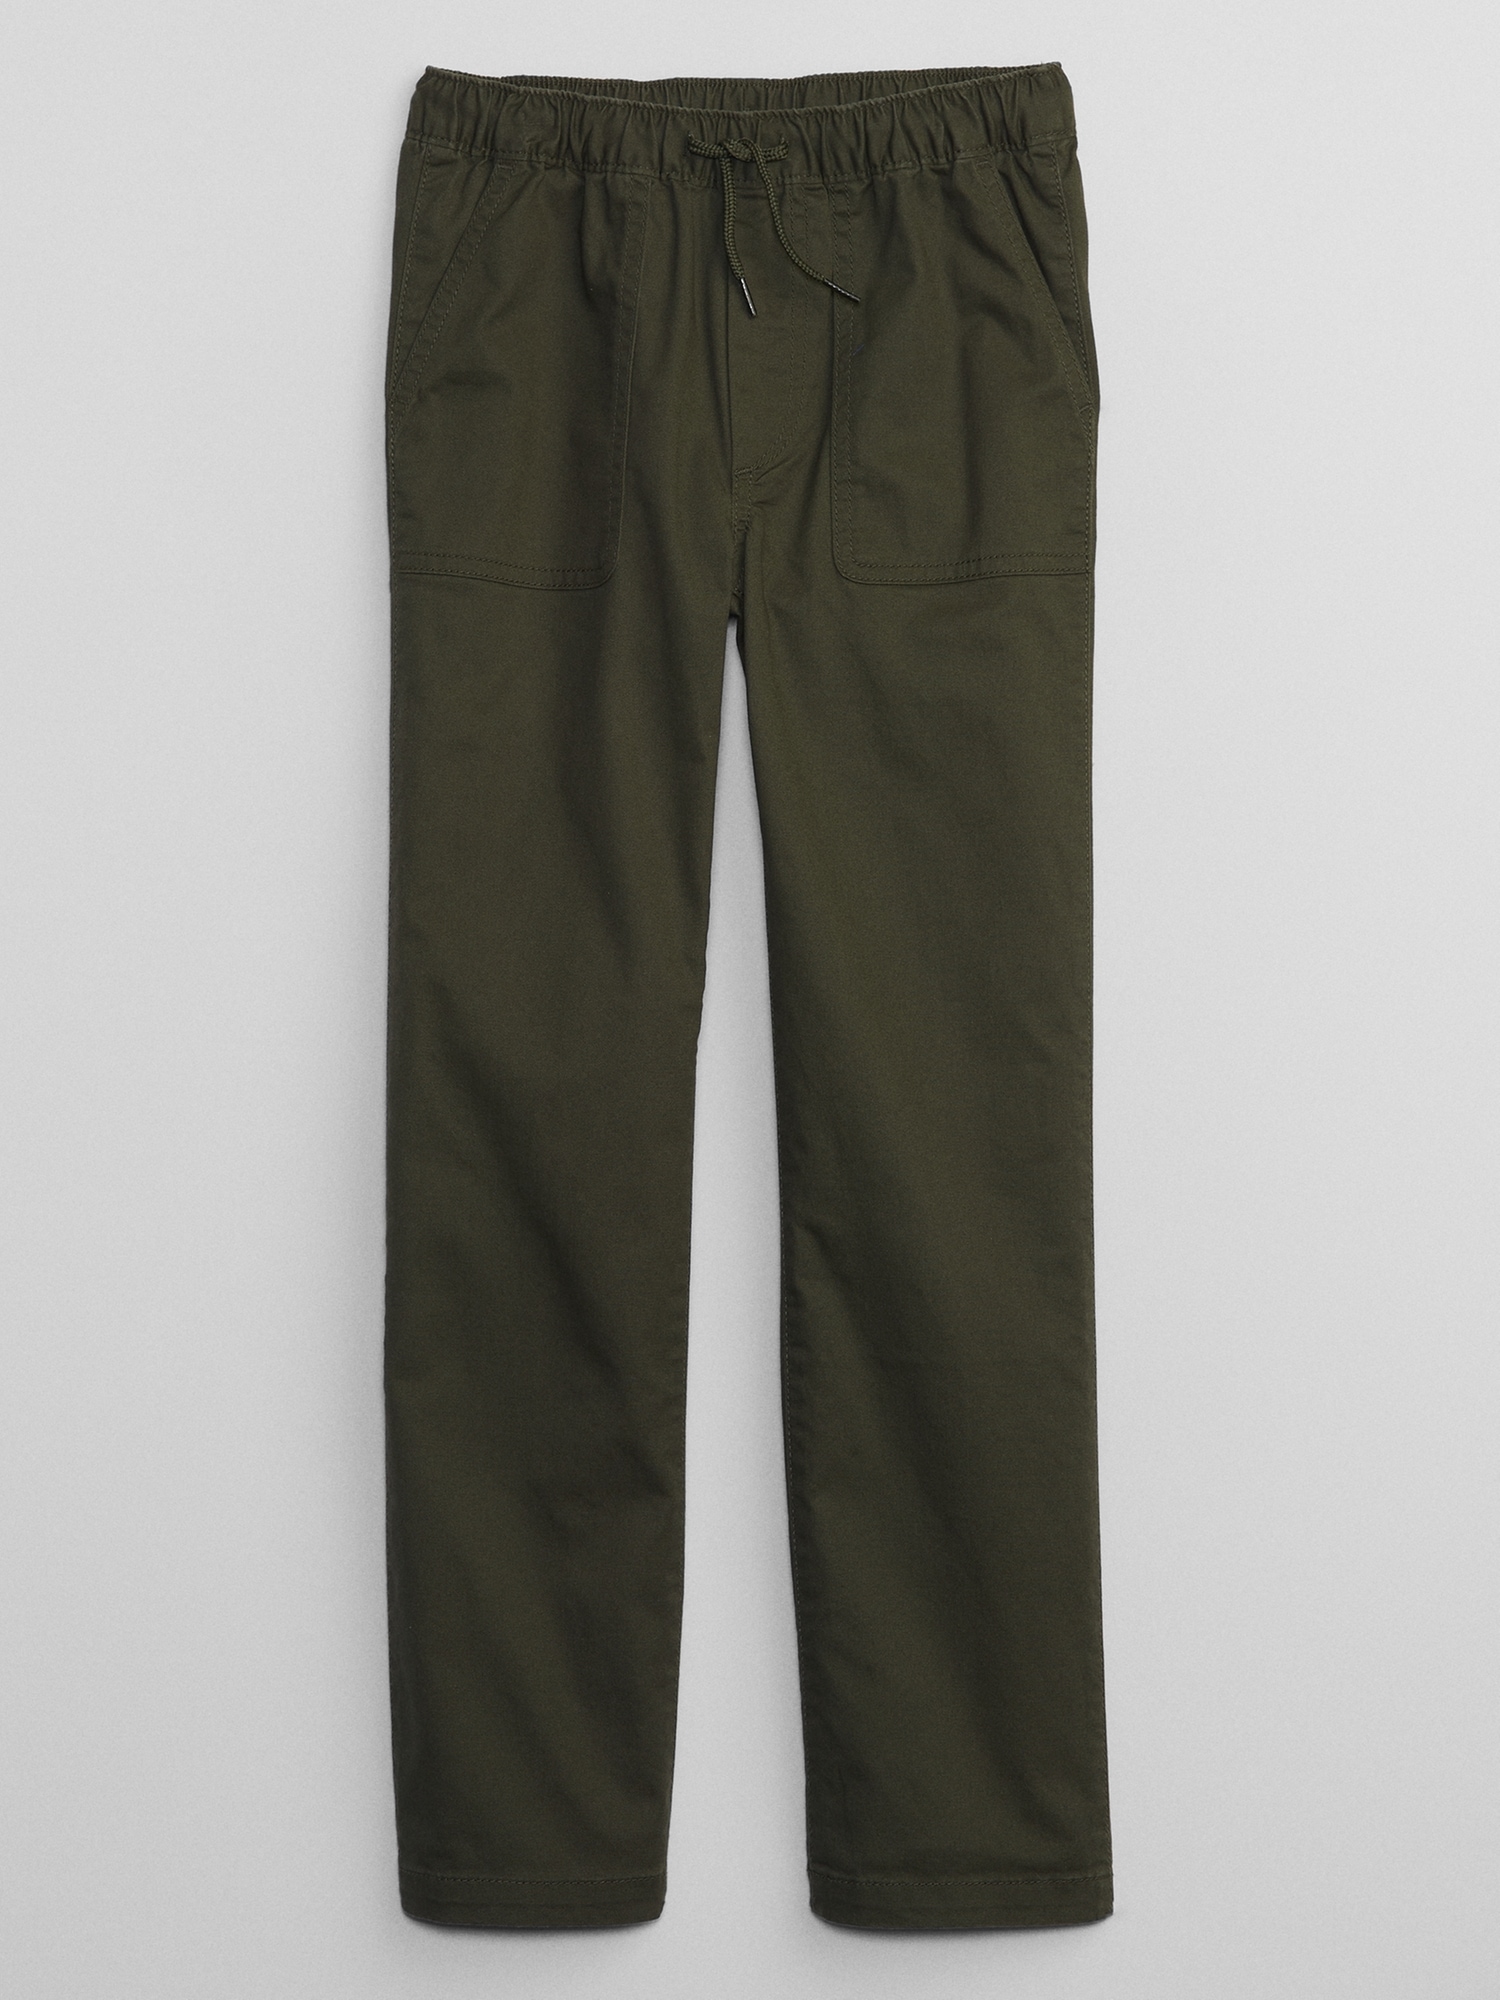 Boys Green Utility Cuffed Pants (3120500)